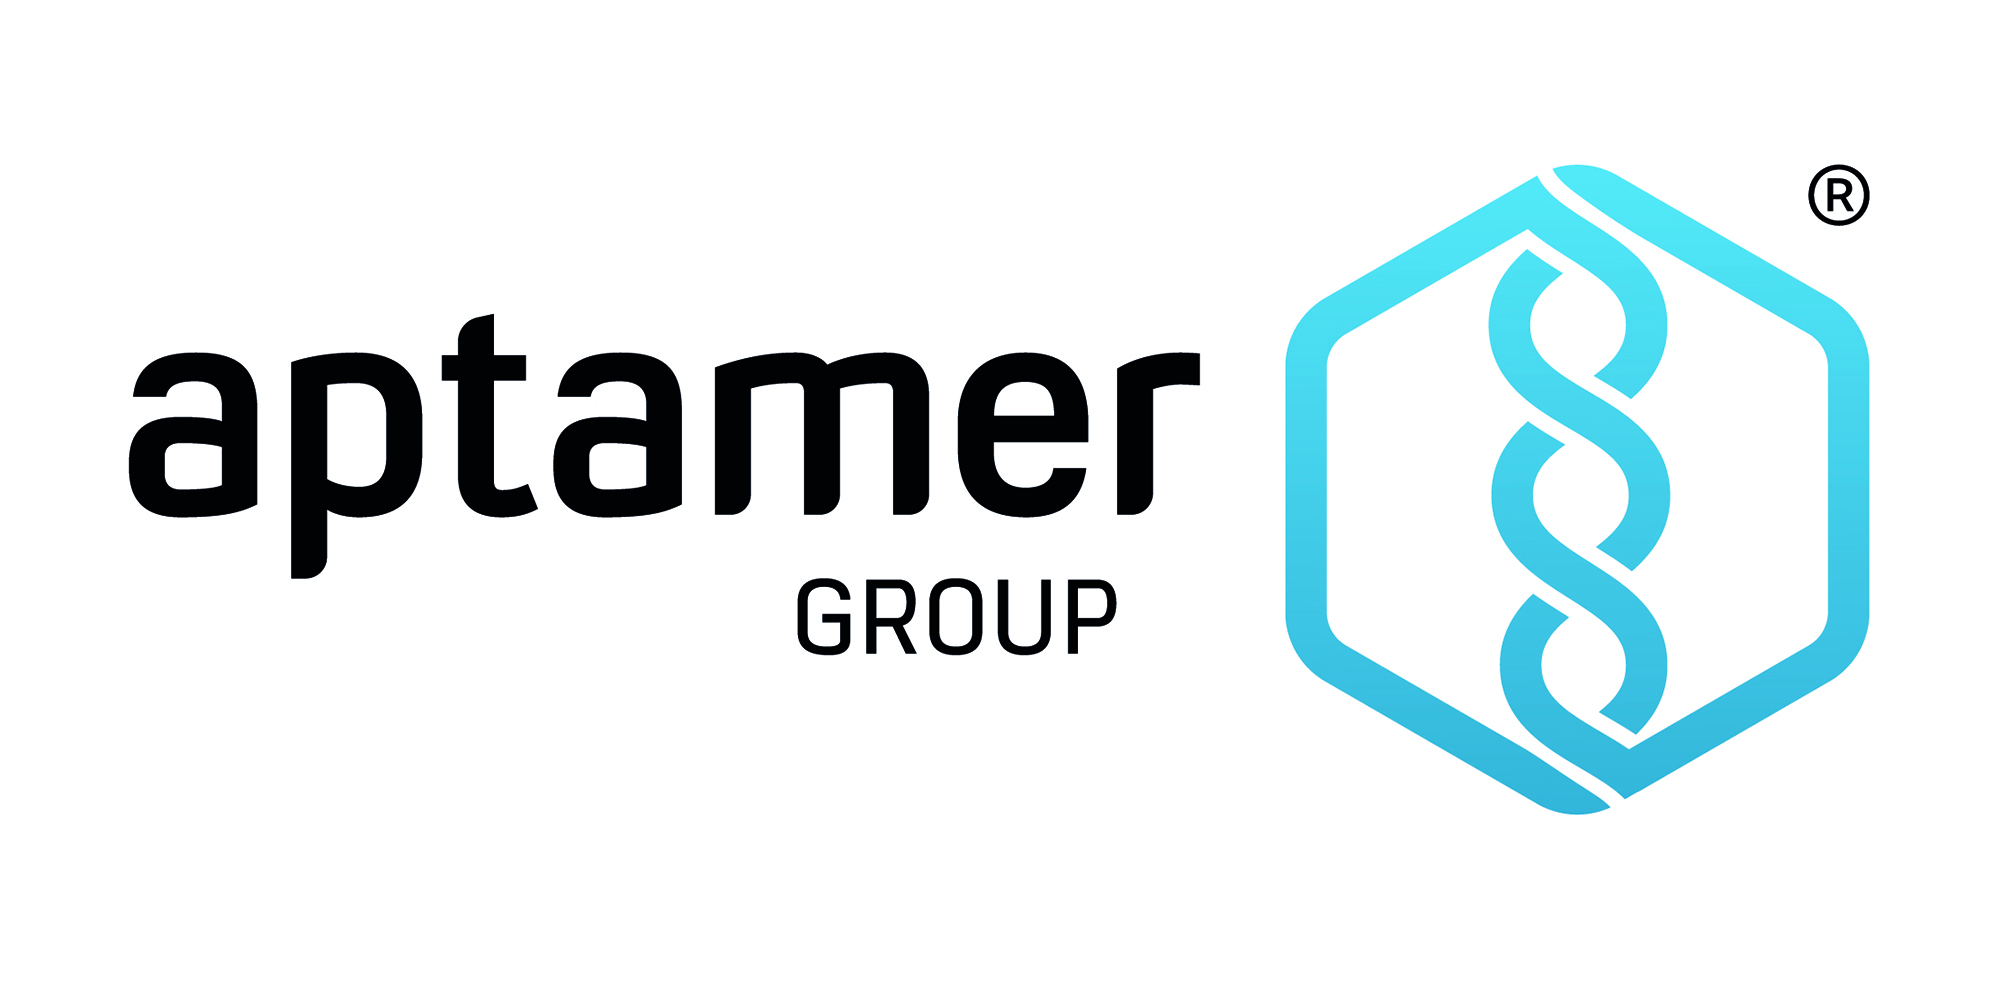 Aptamer Group IDs